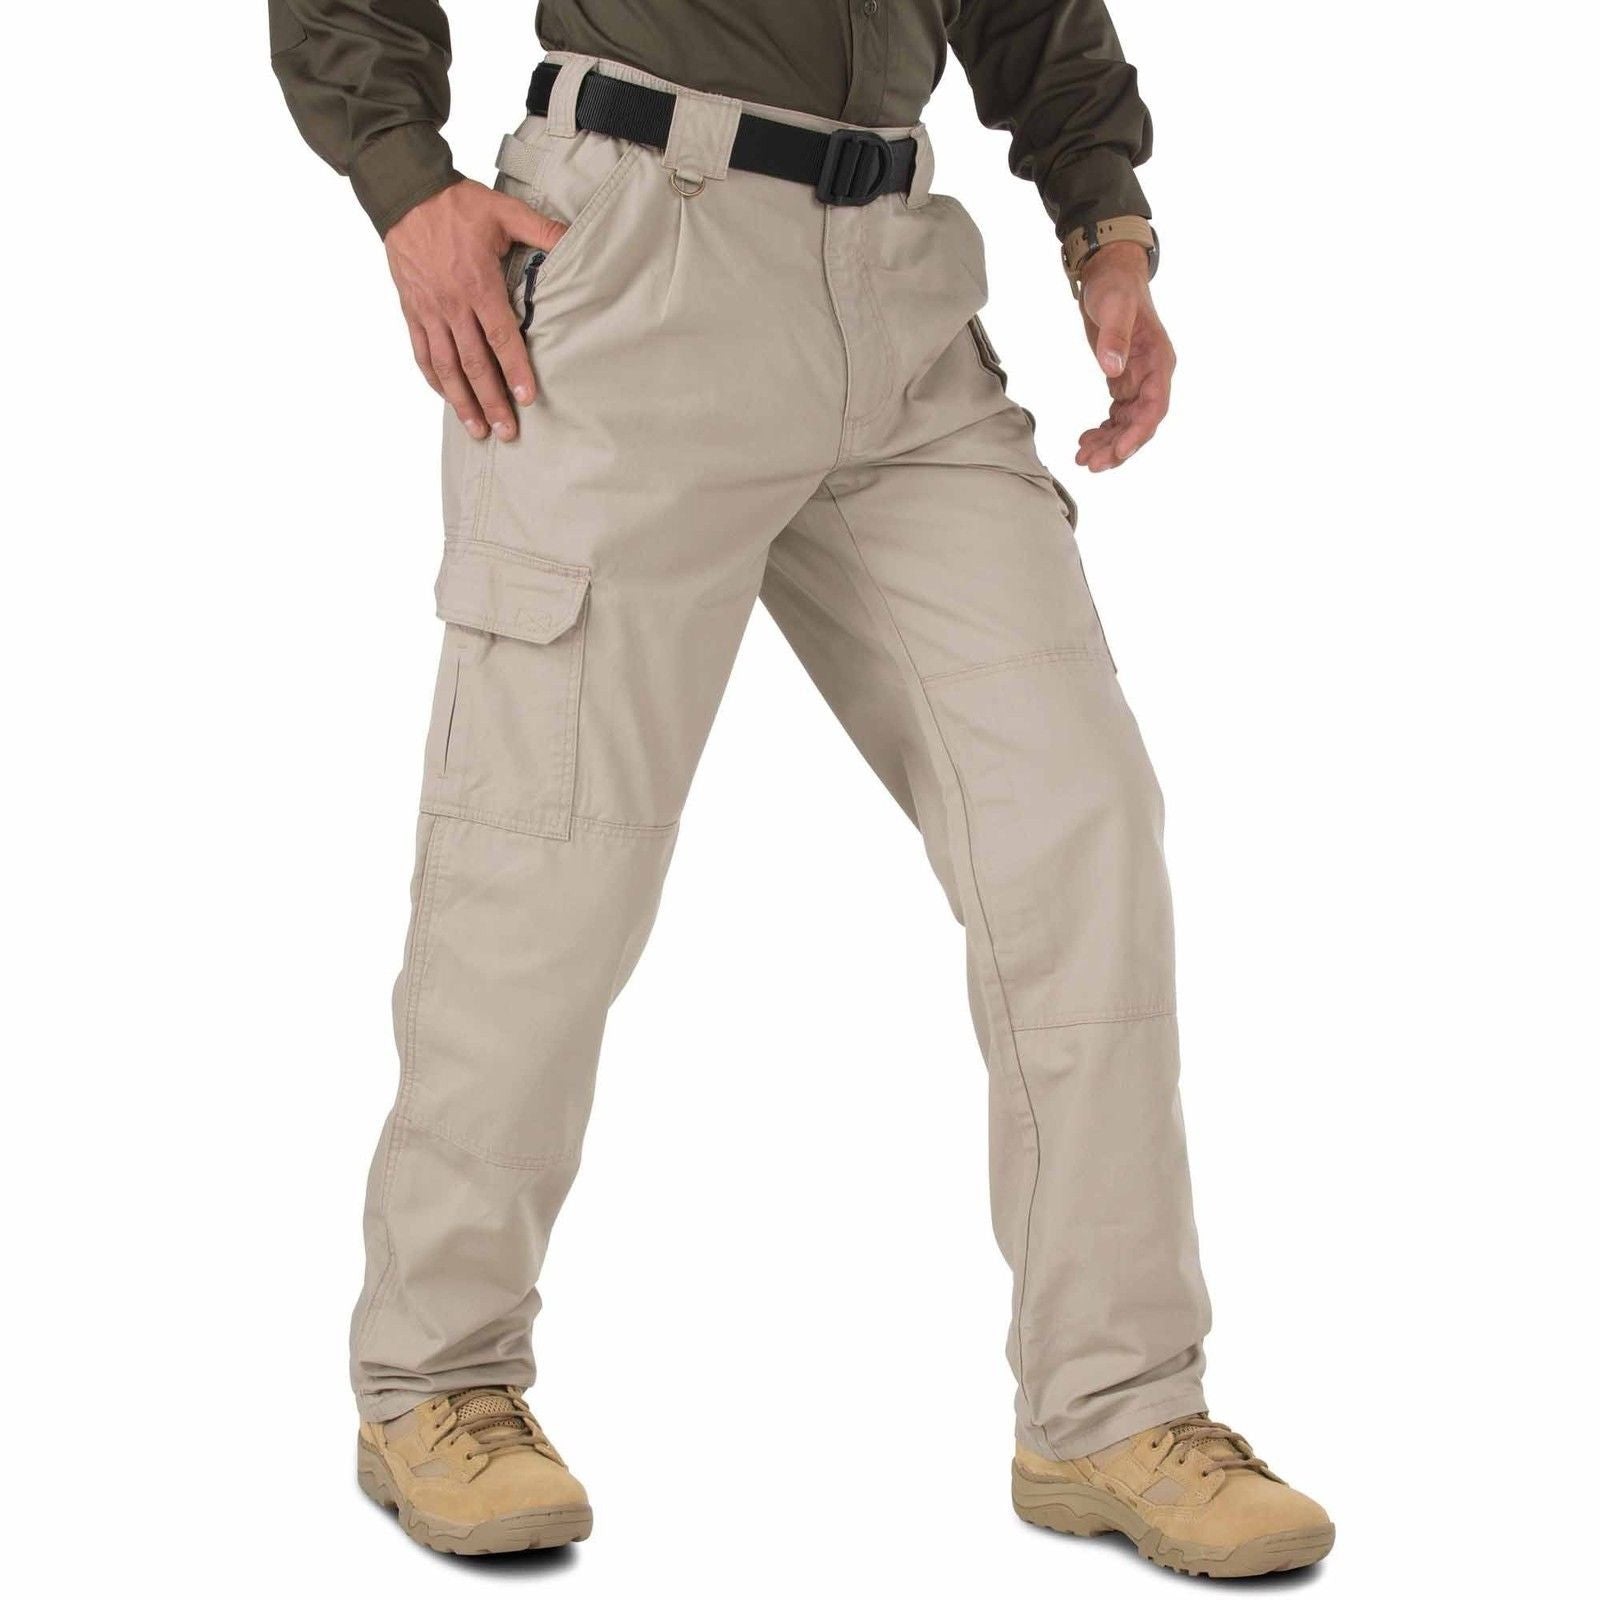 5.11 Tactical Duty Cargo Pant - Mens Outdoor Field Work Uniform Pants ...